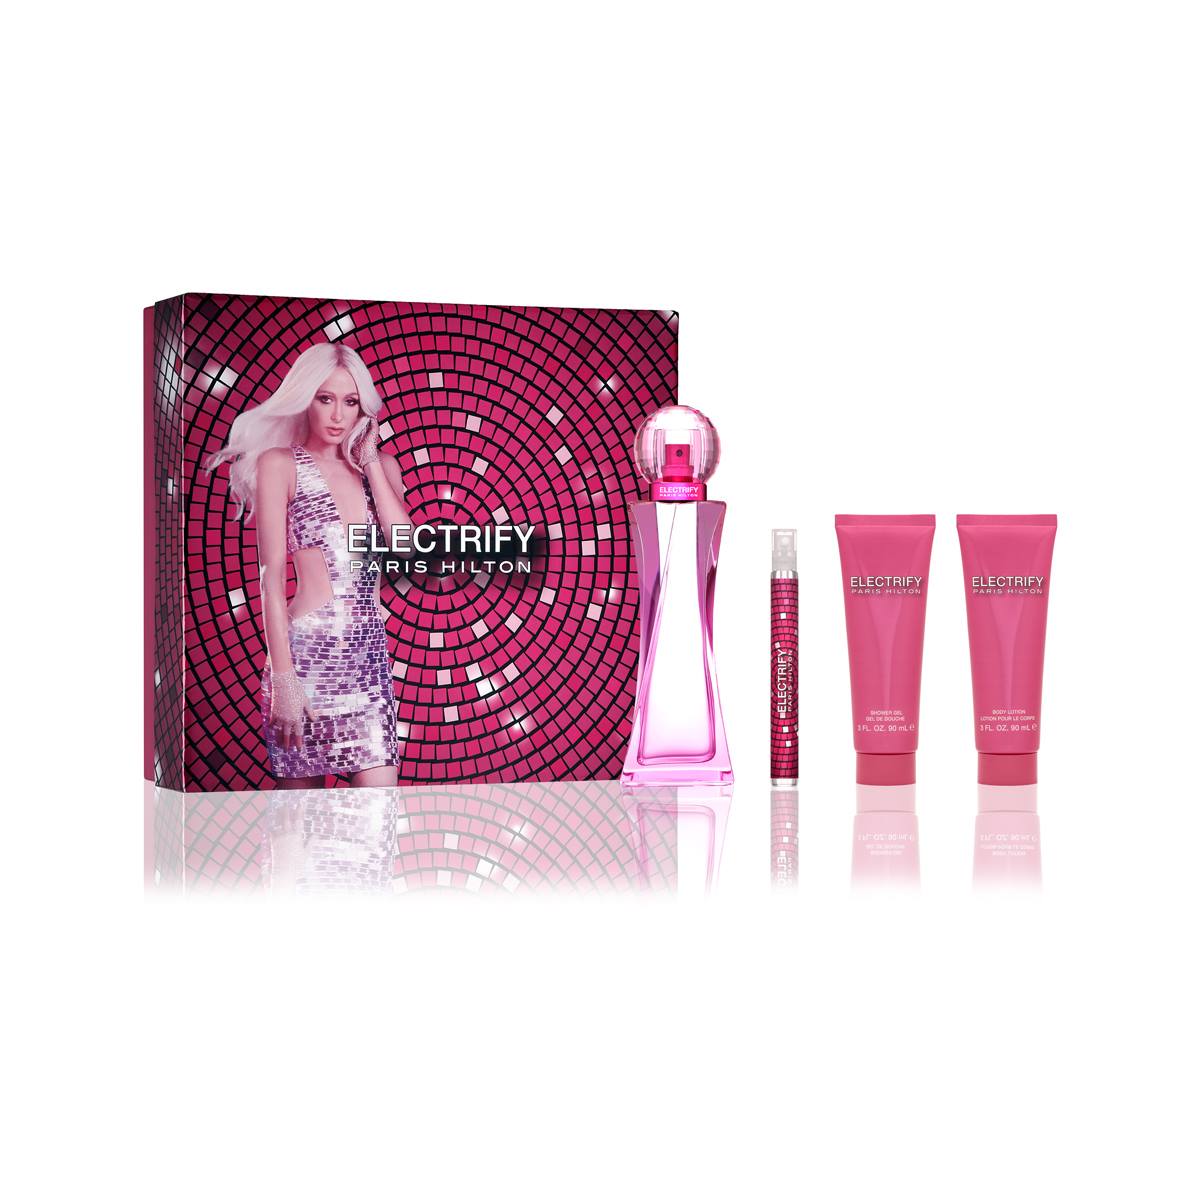 Paris Hilton Electrify Perfume 4pc. Gift Set - Value $65.00